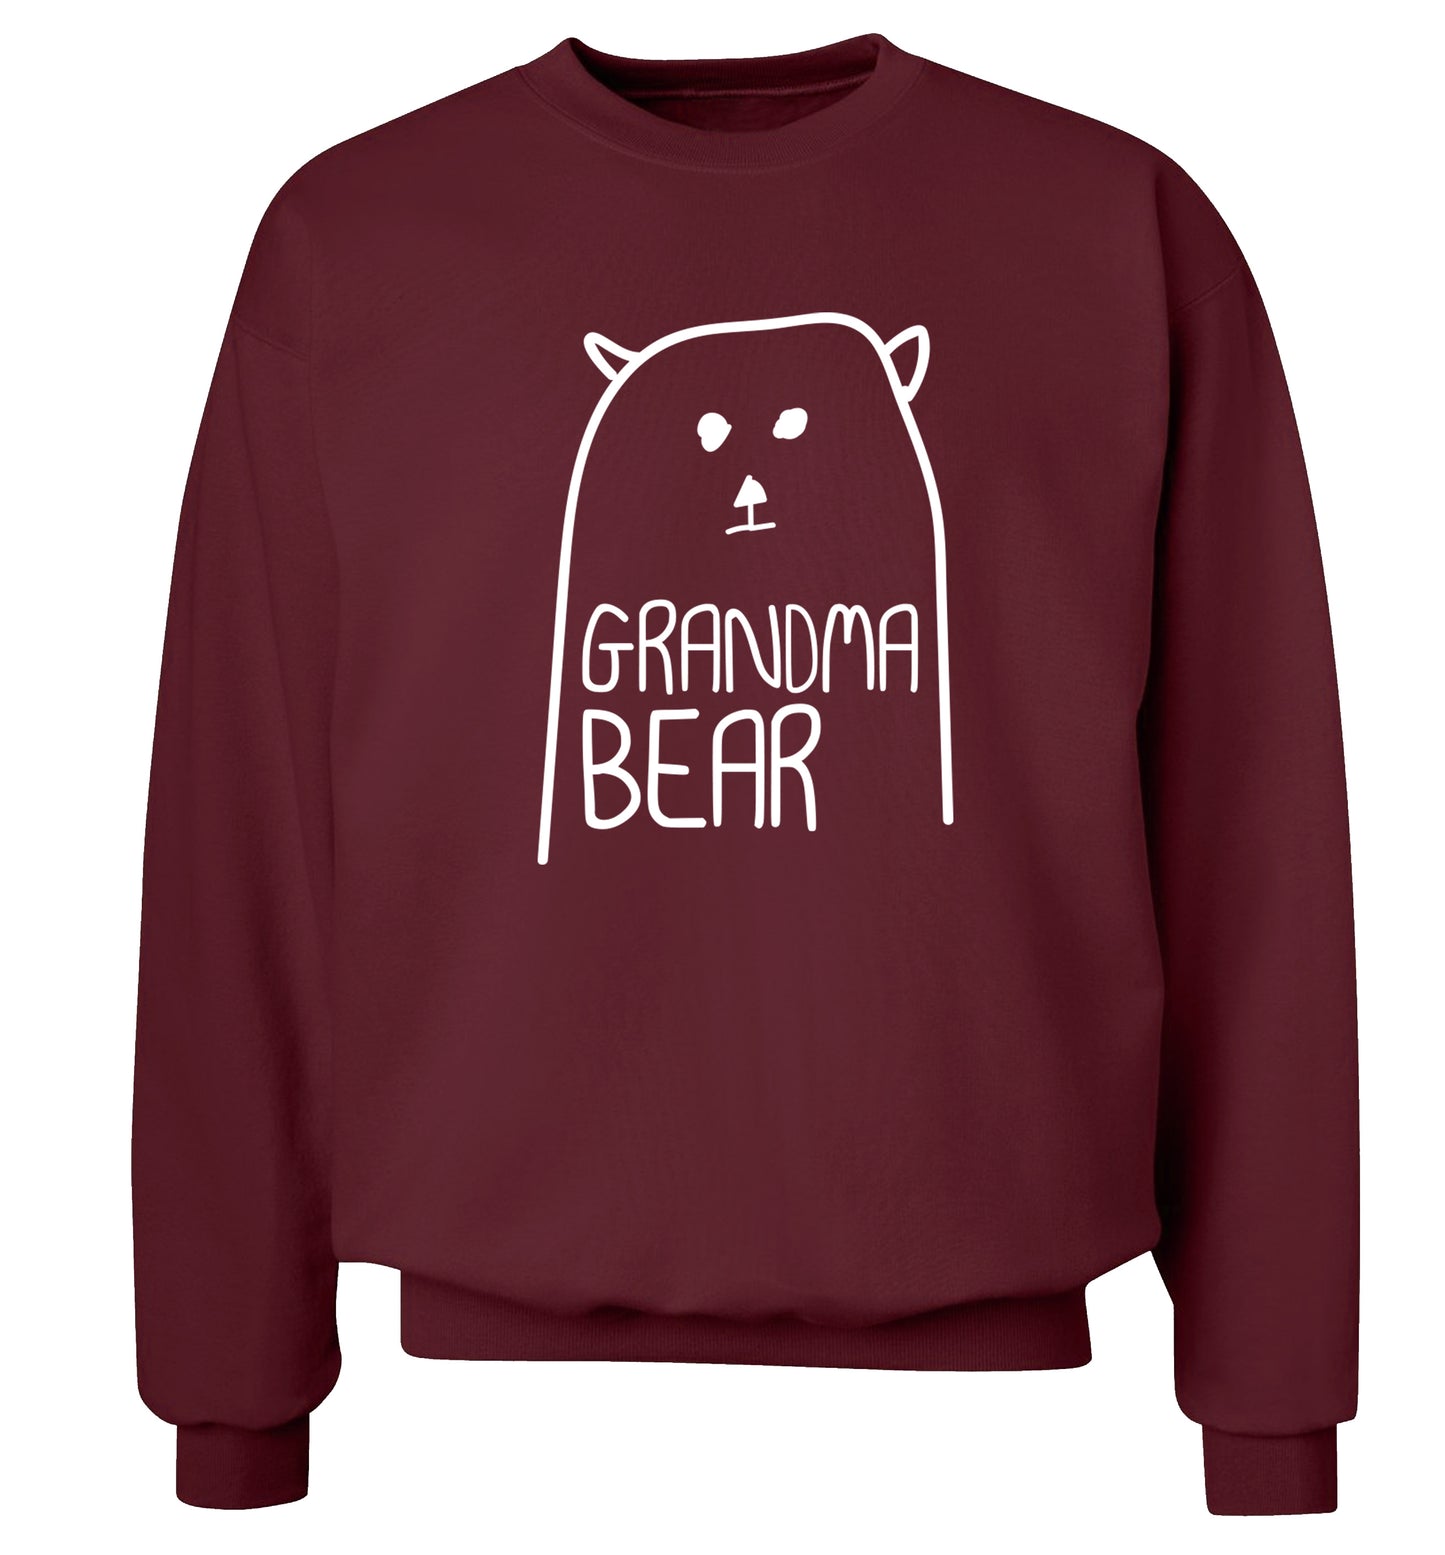 Grandma bear Adult's unisex maroon Sweater 2XL